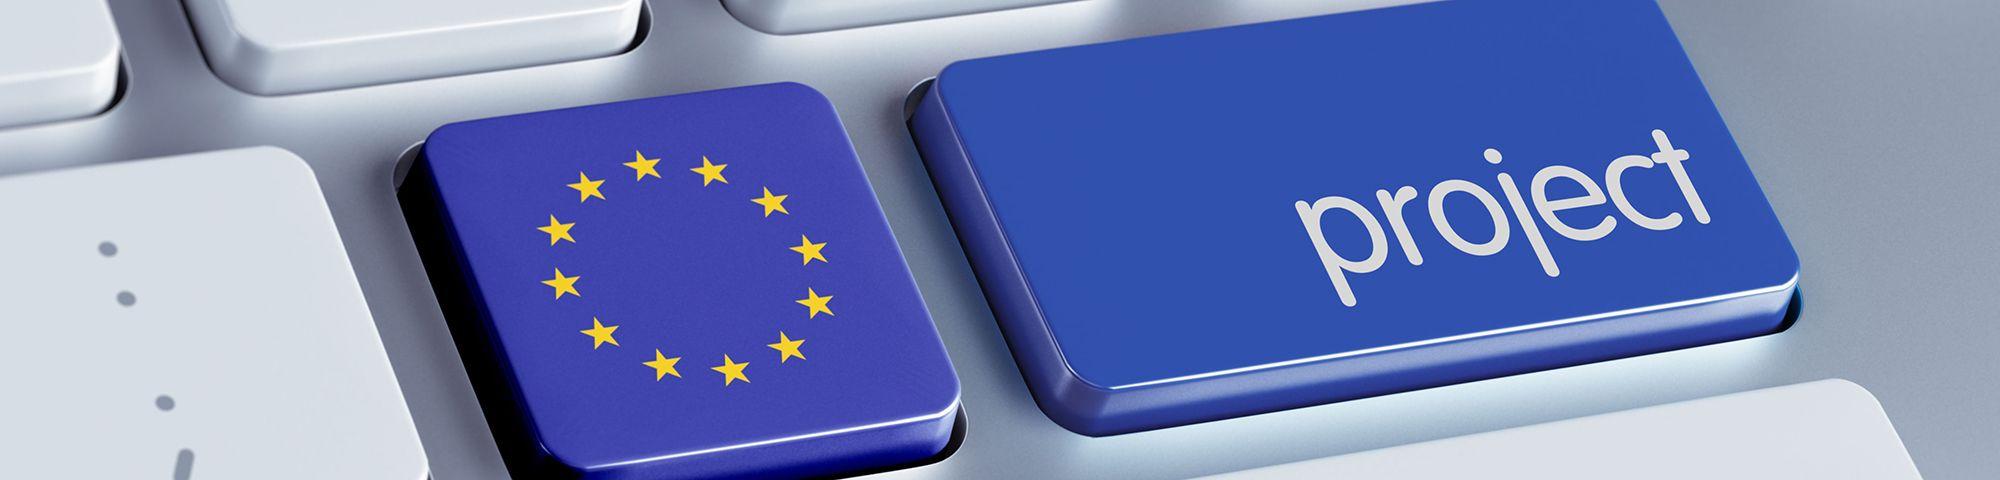 Toetsenbord met EU logo vlag